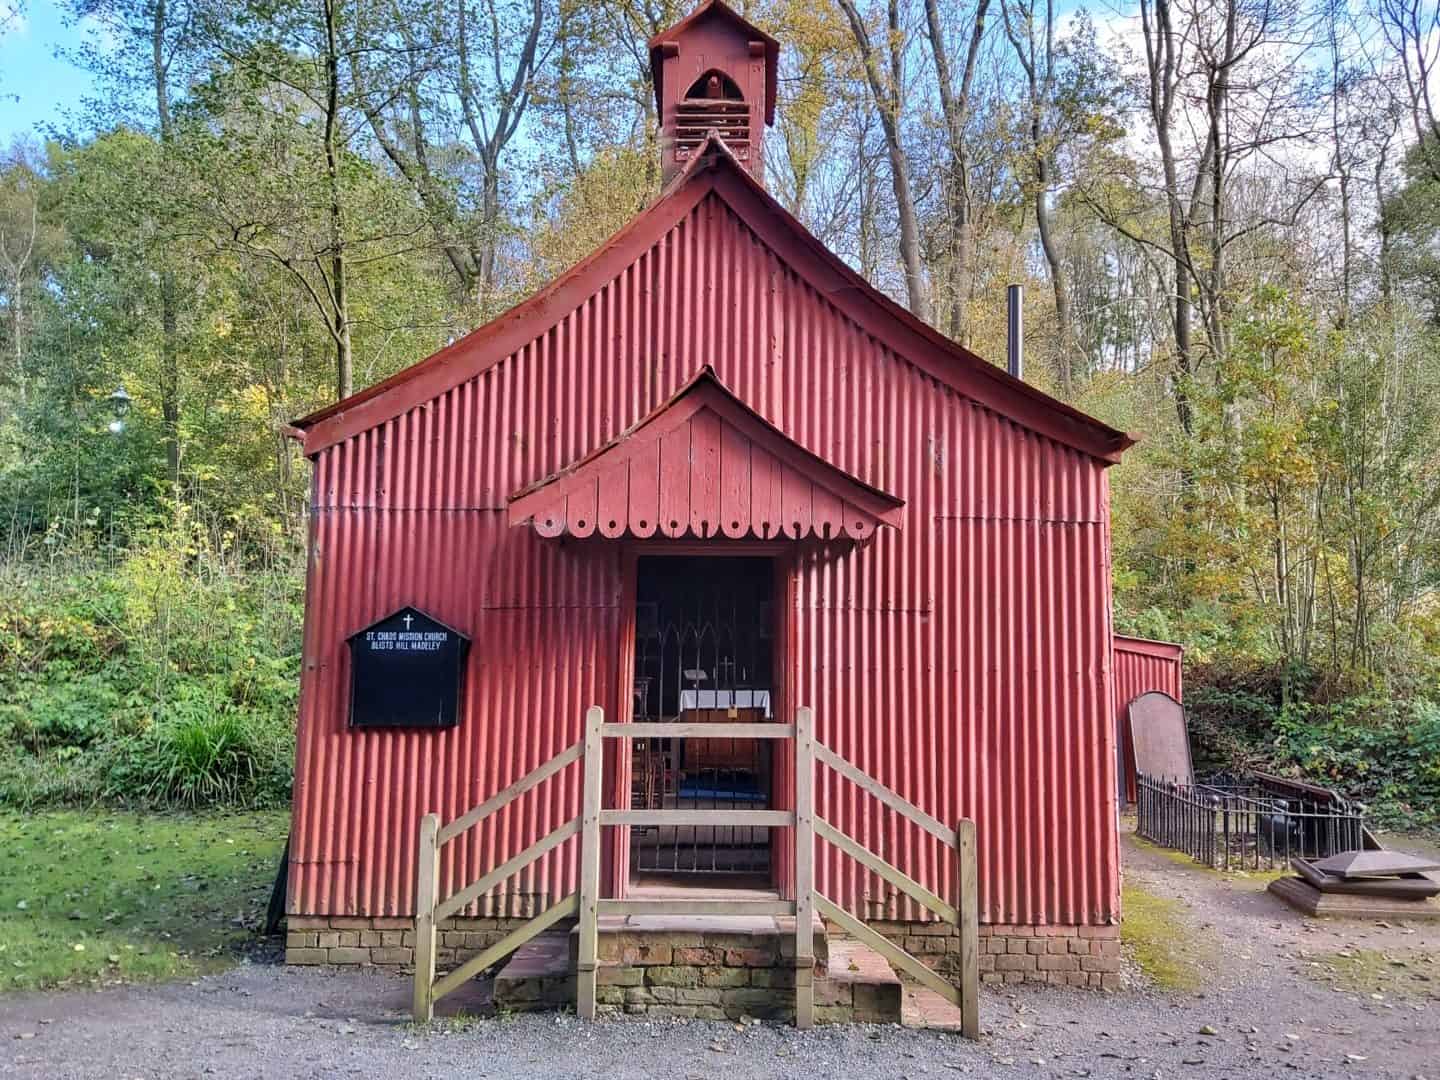 Red corrugated iron church